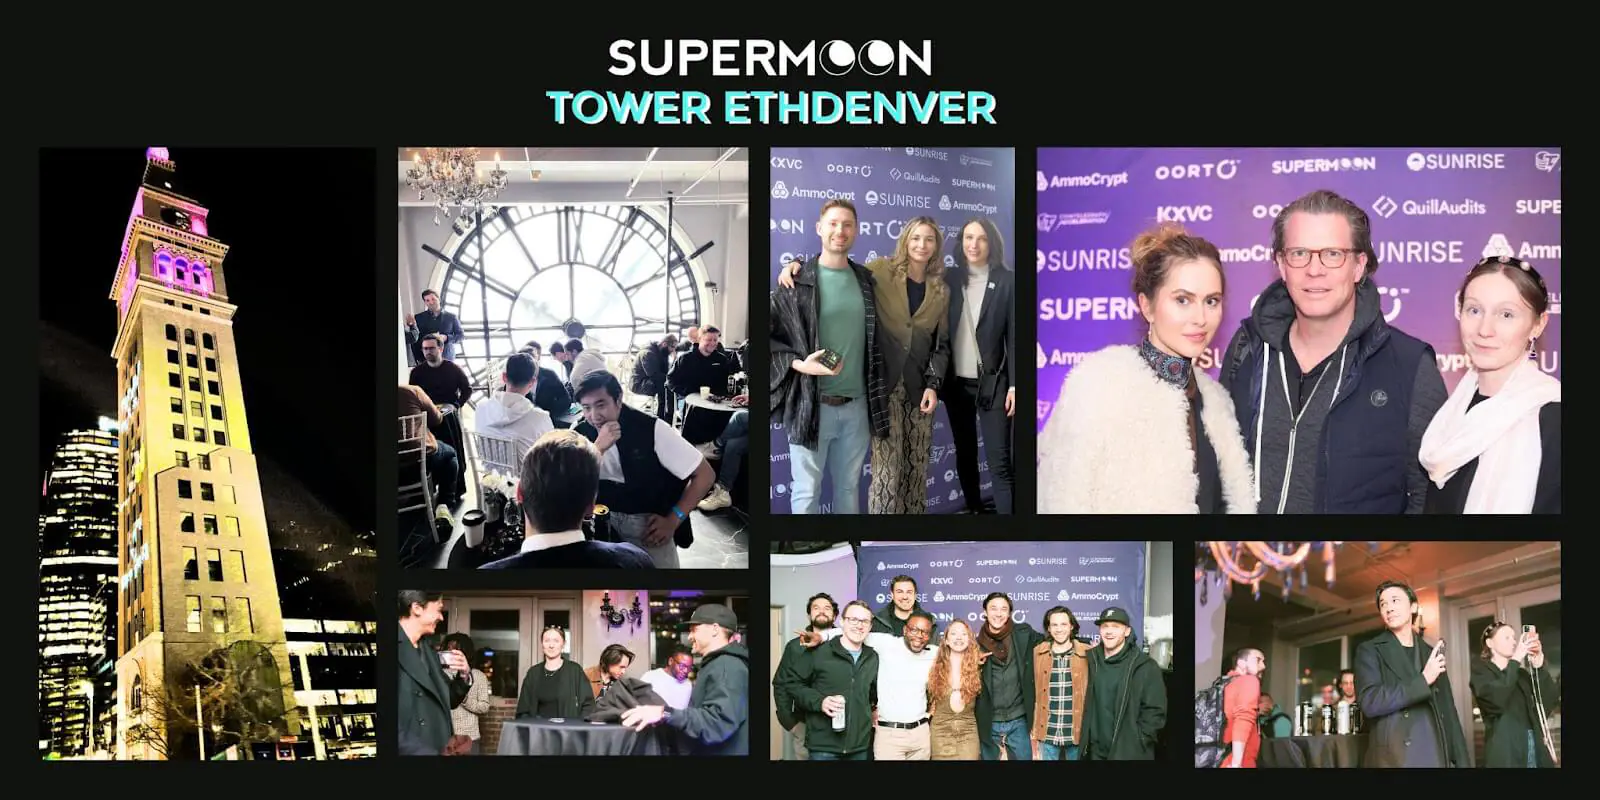 SUPERMOON TOWER ETHDENVER